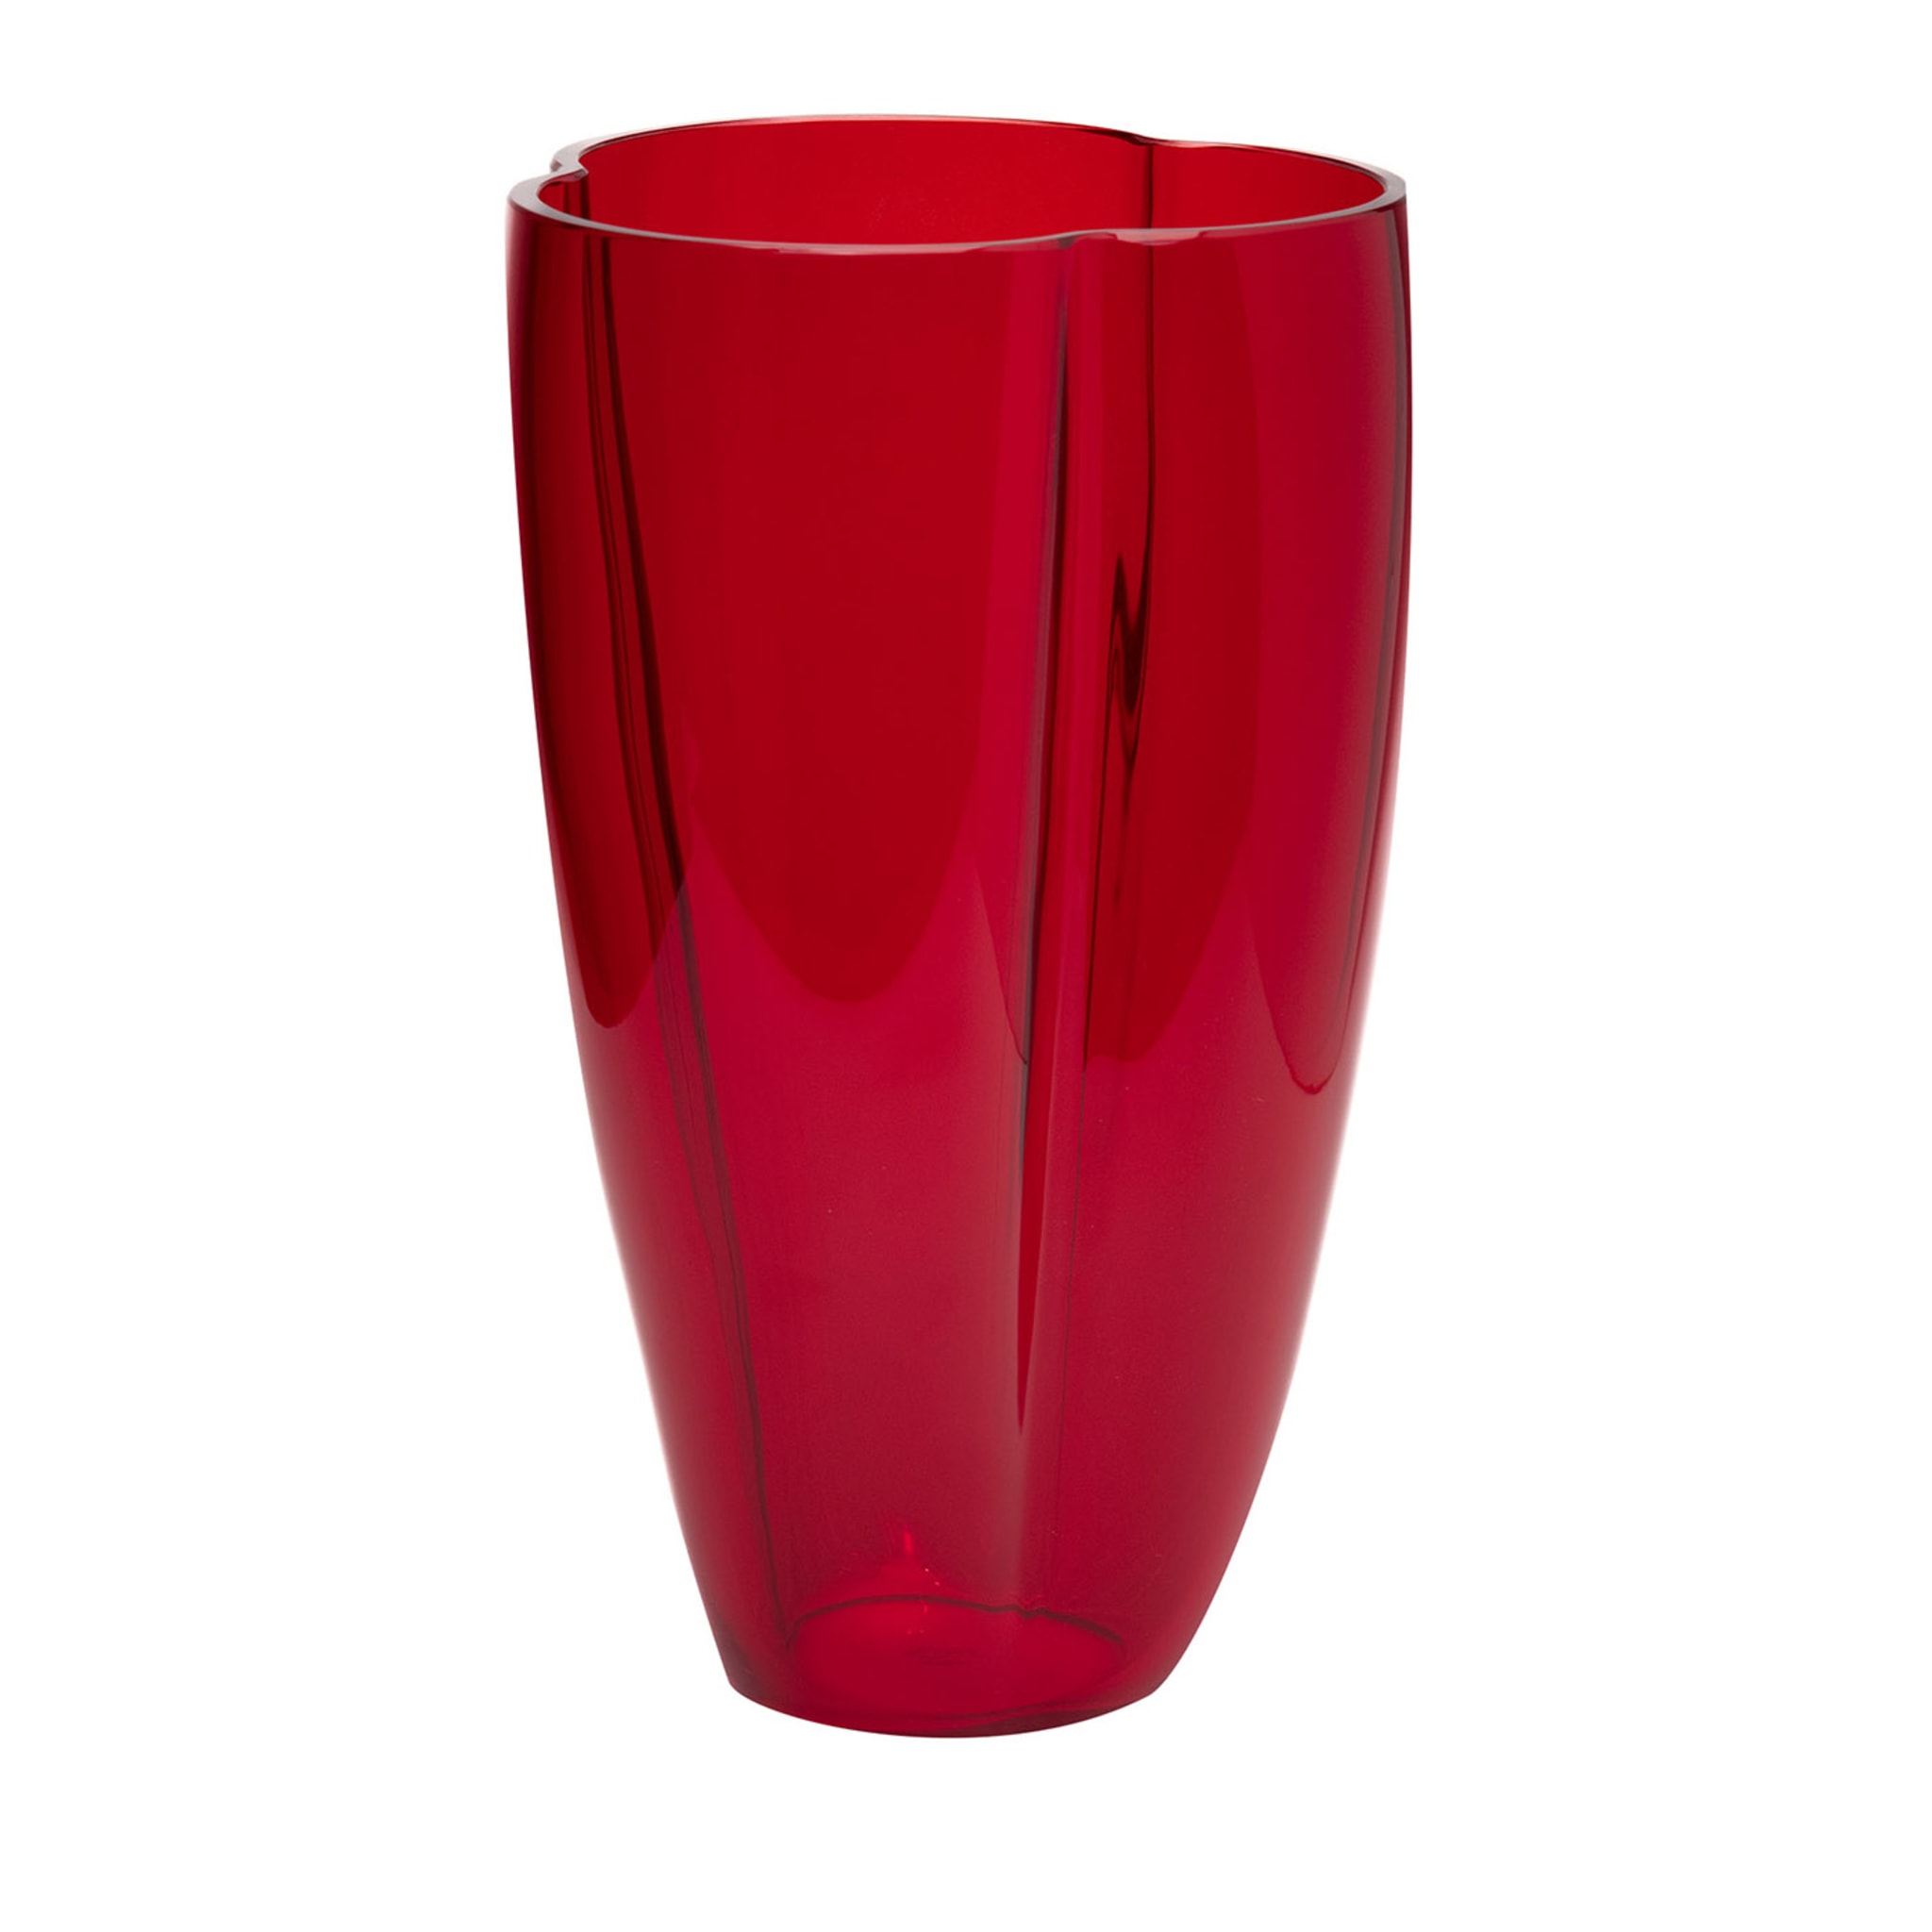 Petalo Oriental Red Large Vase - Alternative view 1